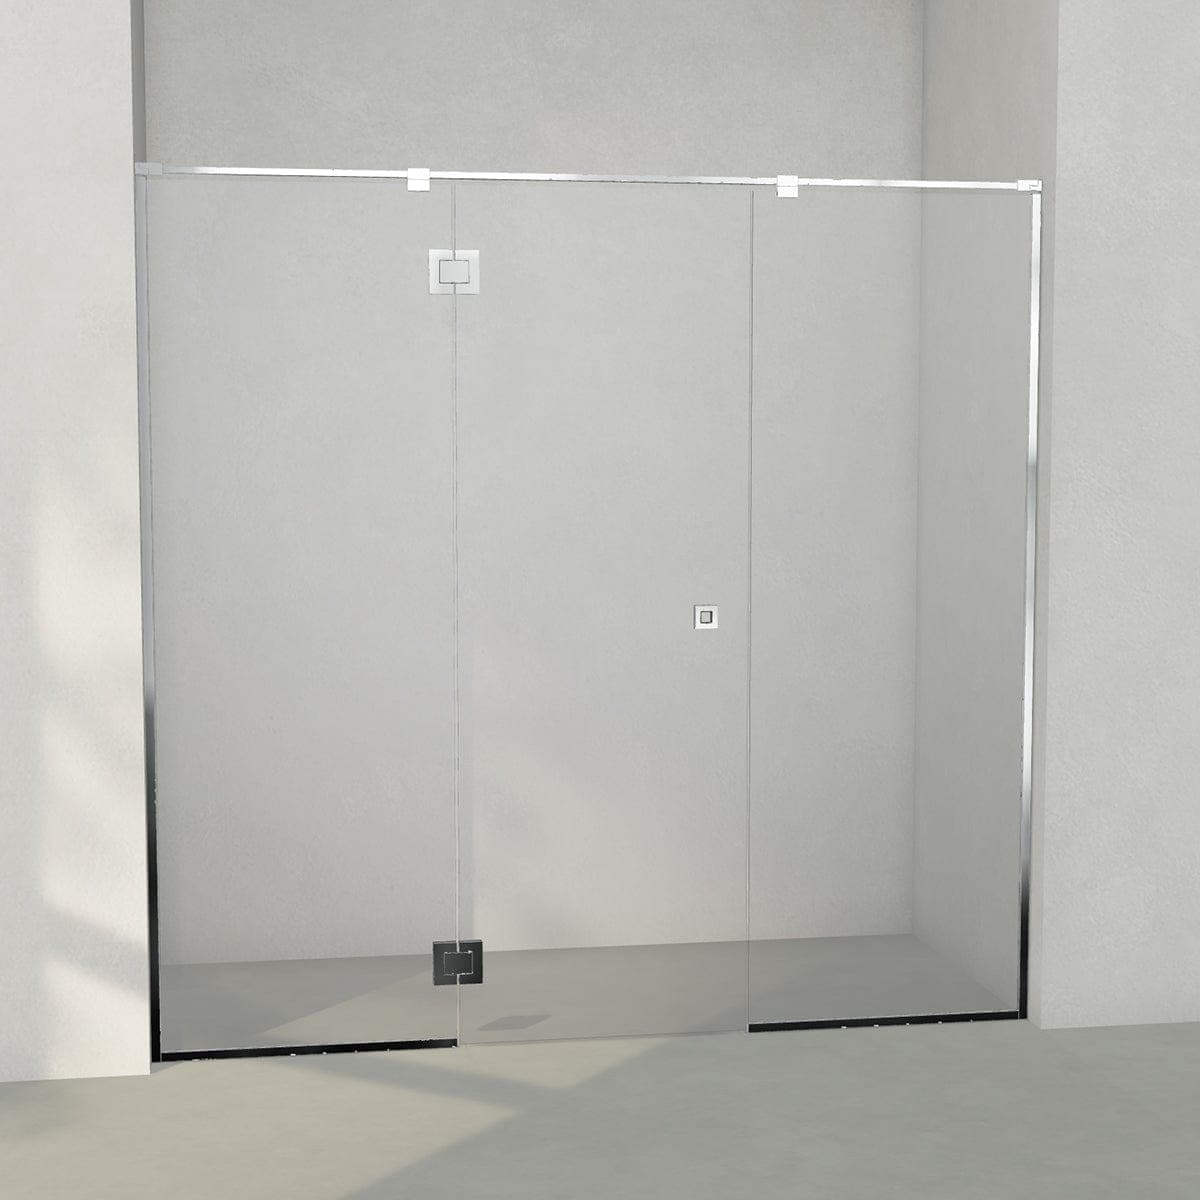 INR Iconic Nordic Rooms Dusjnisje ARC 7 Frame Måltilpasset Krom / Grått Glass Dusjnisje